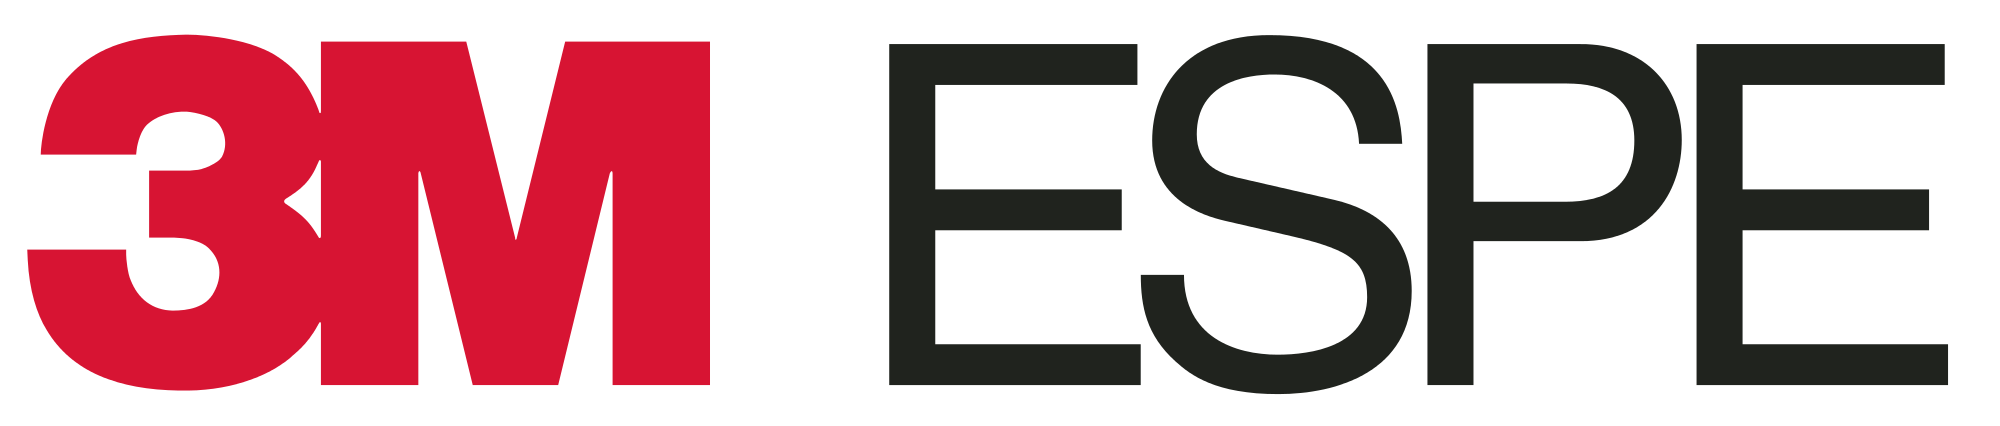 2000px-Espe-logo.svg.png